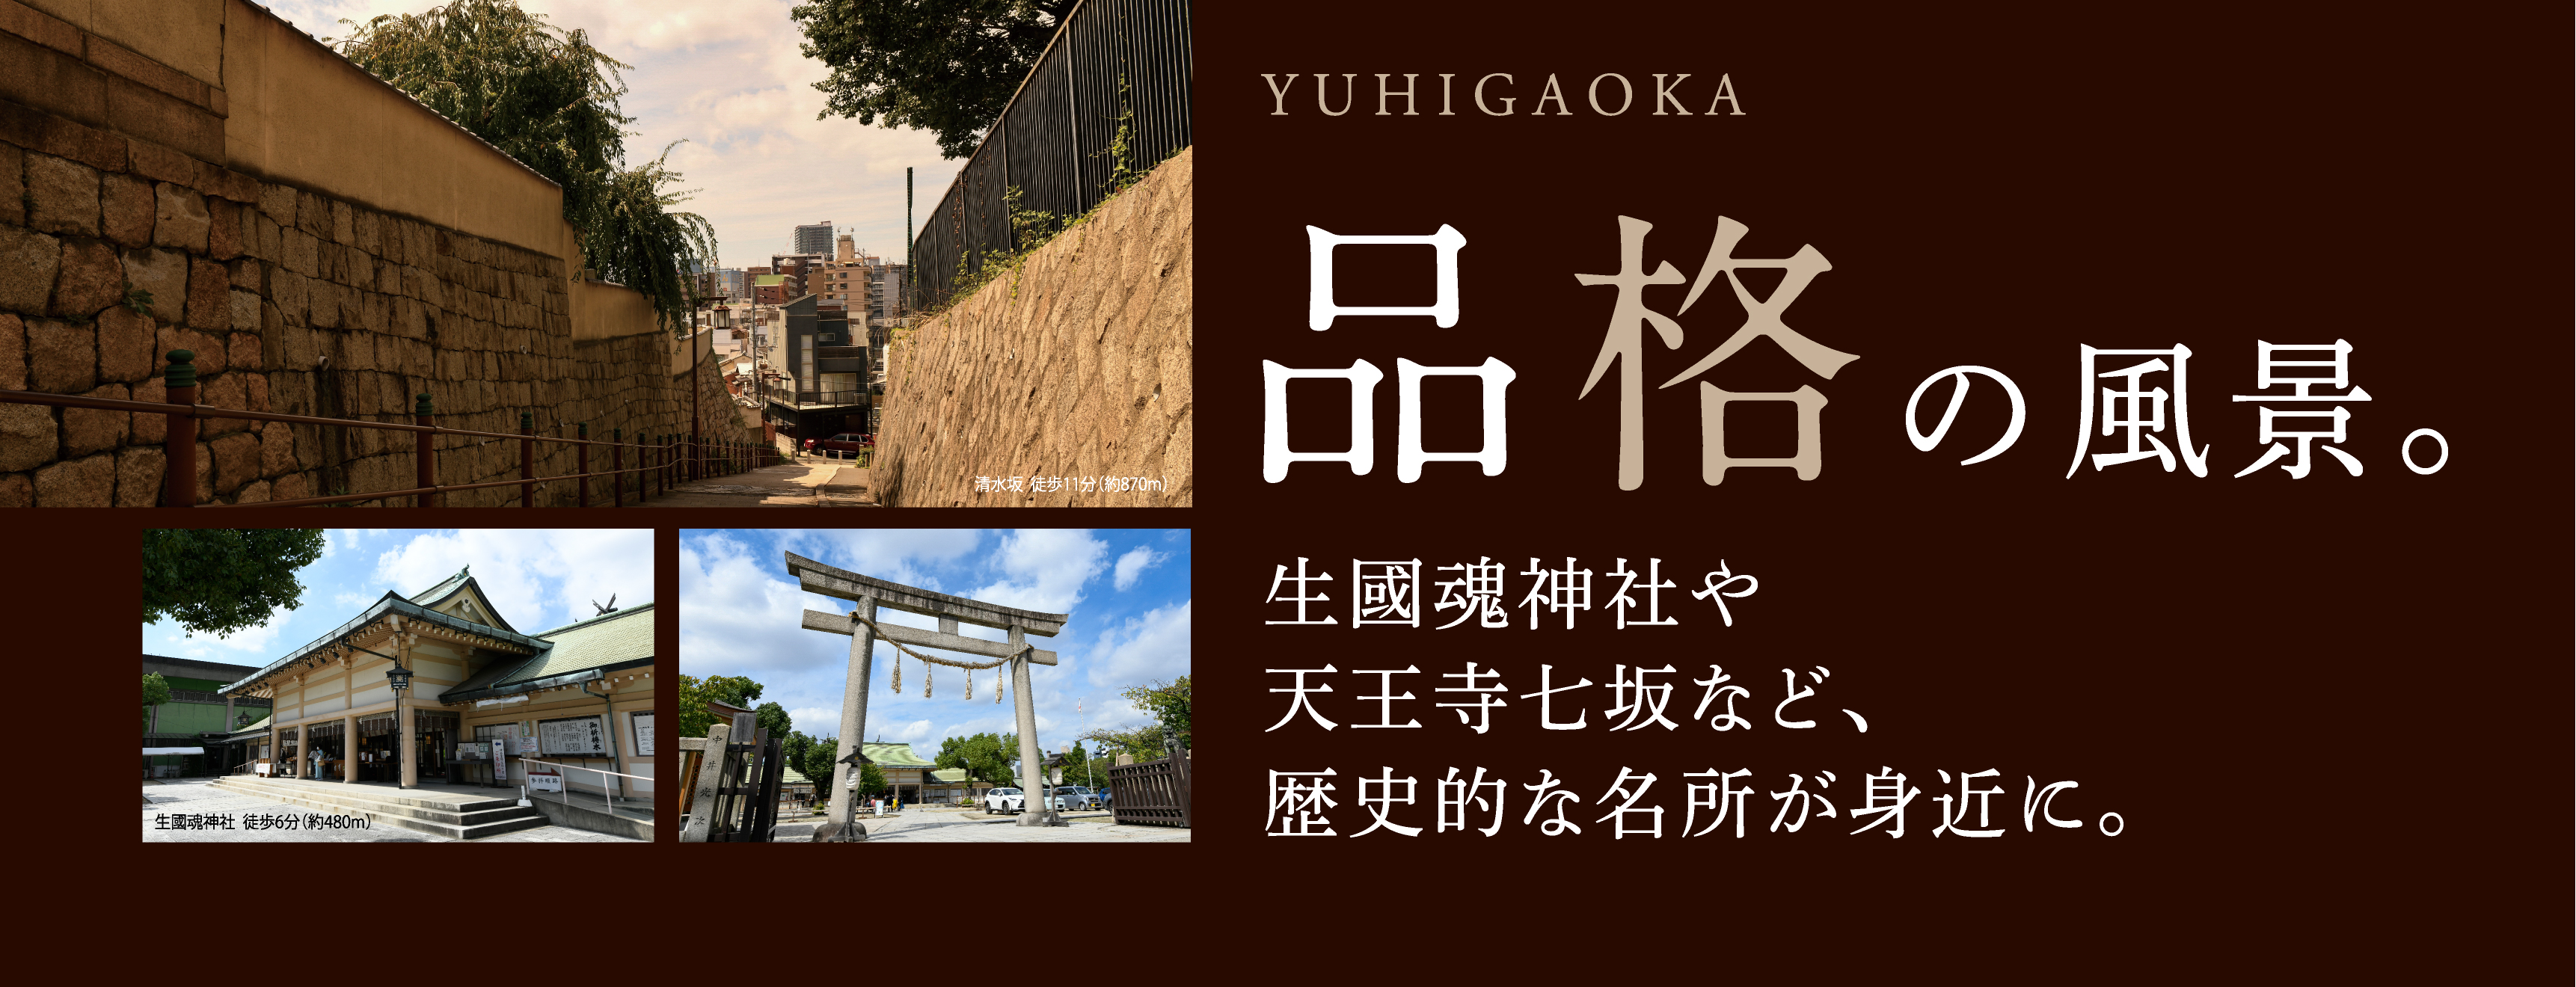 YUHIGAOKA 品格の風景。 生國魂神社や天王寺七坂など、歴史的な名所が身近に。